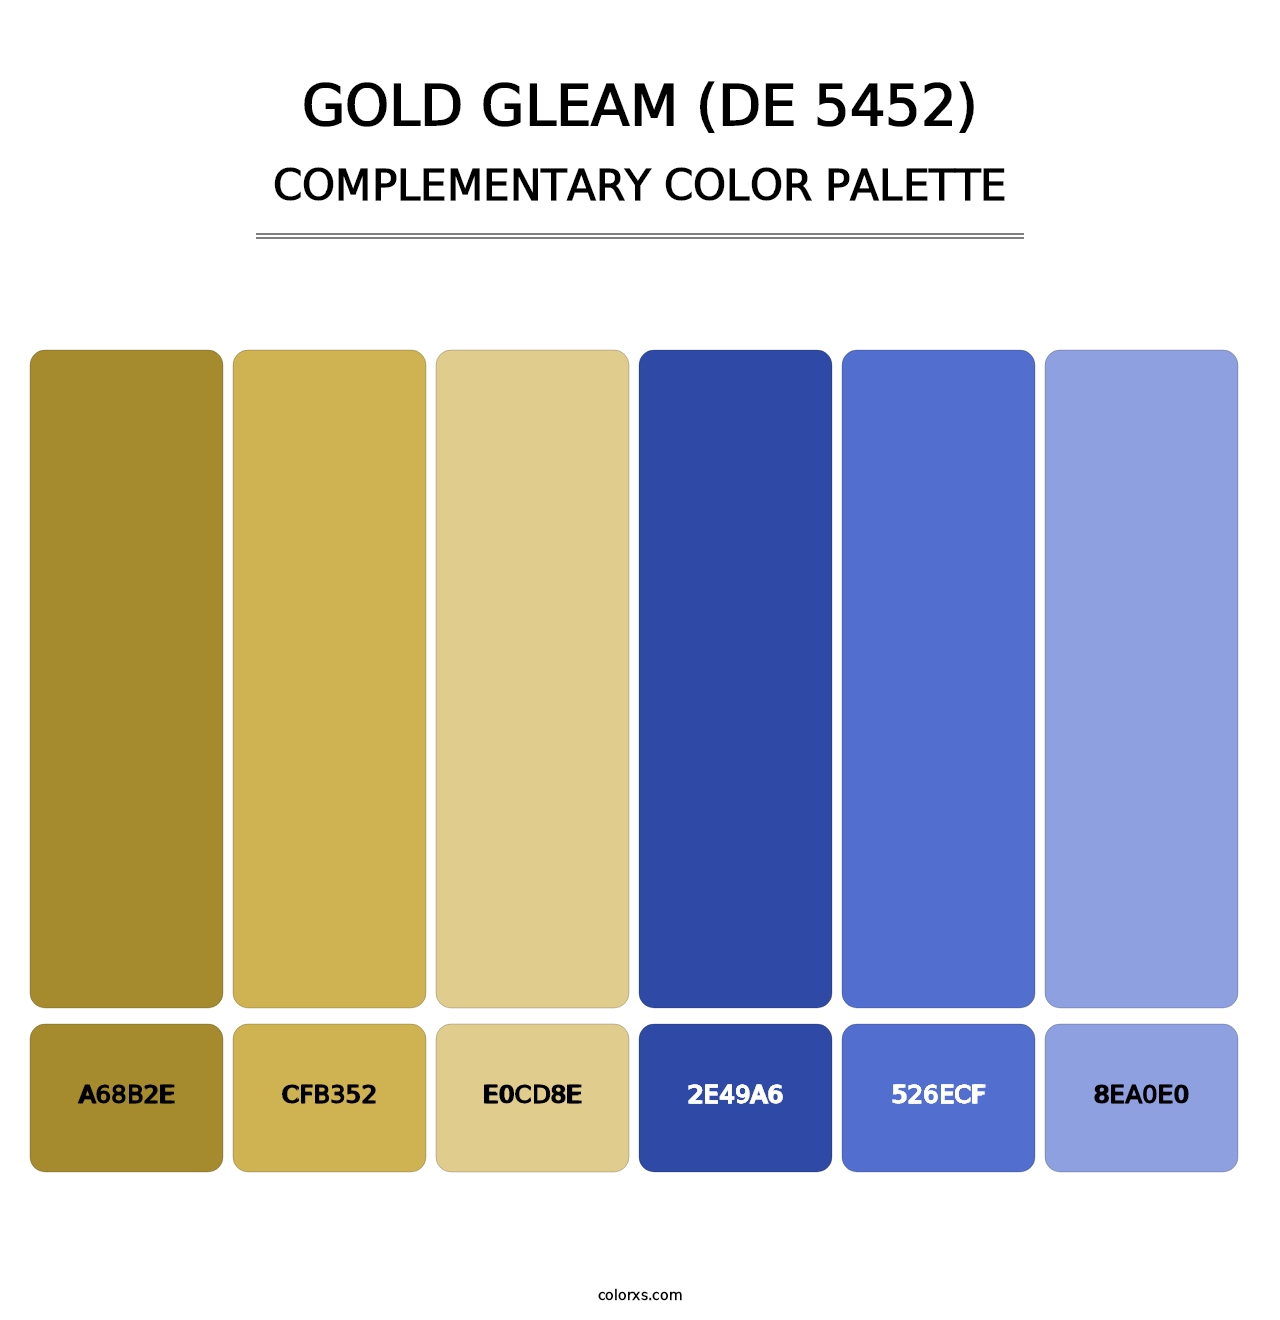 Gold Gleam (DE 5452) - Complementary Color Palette